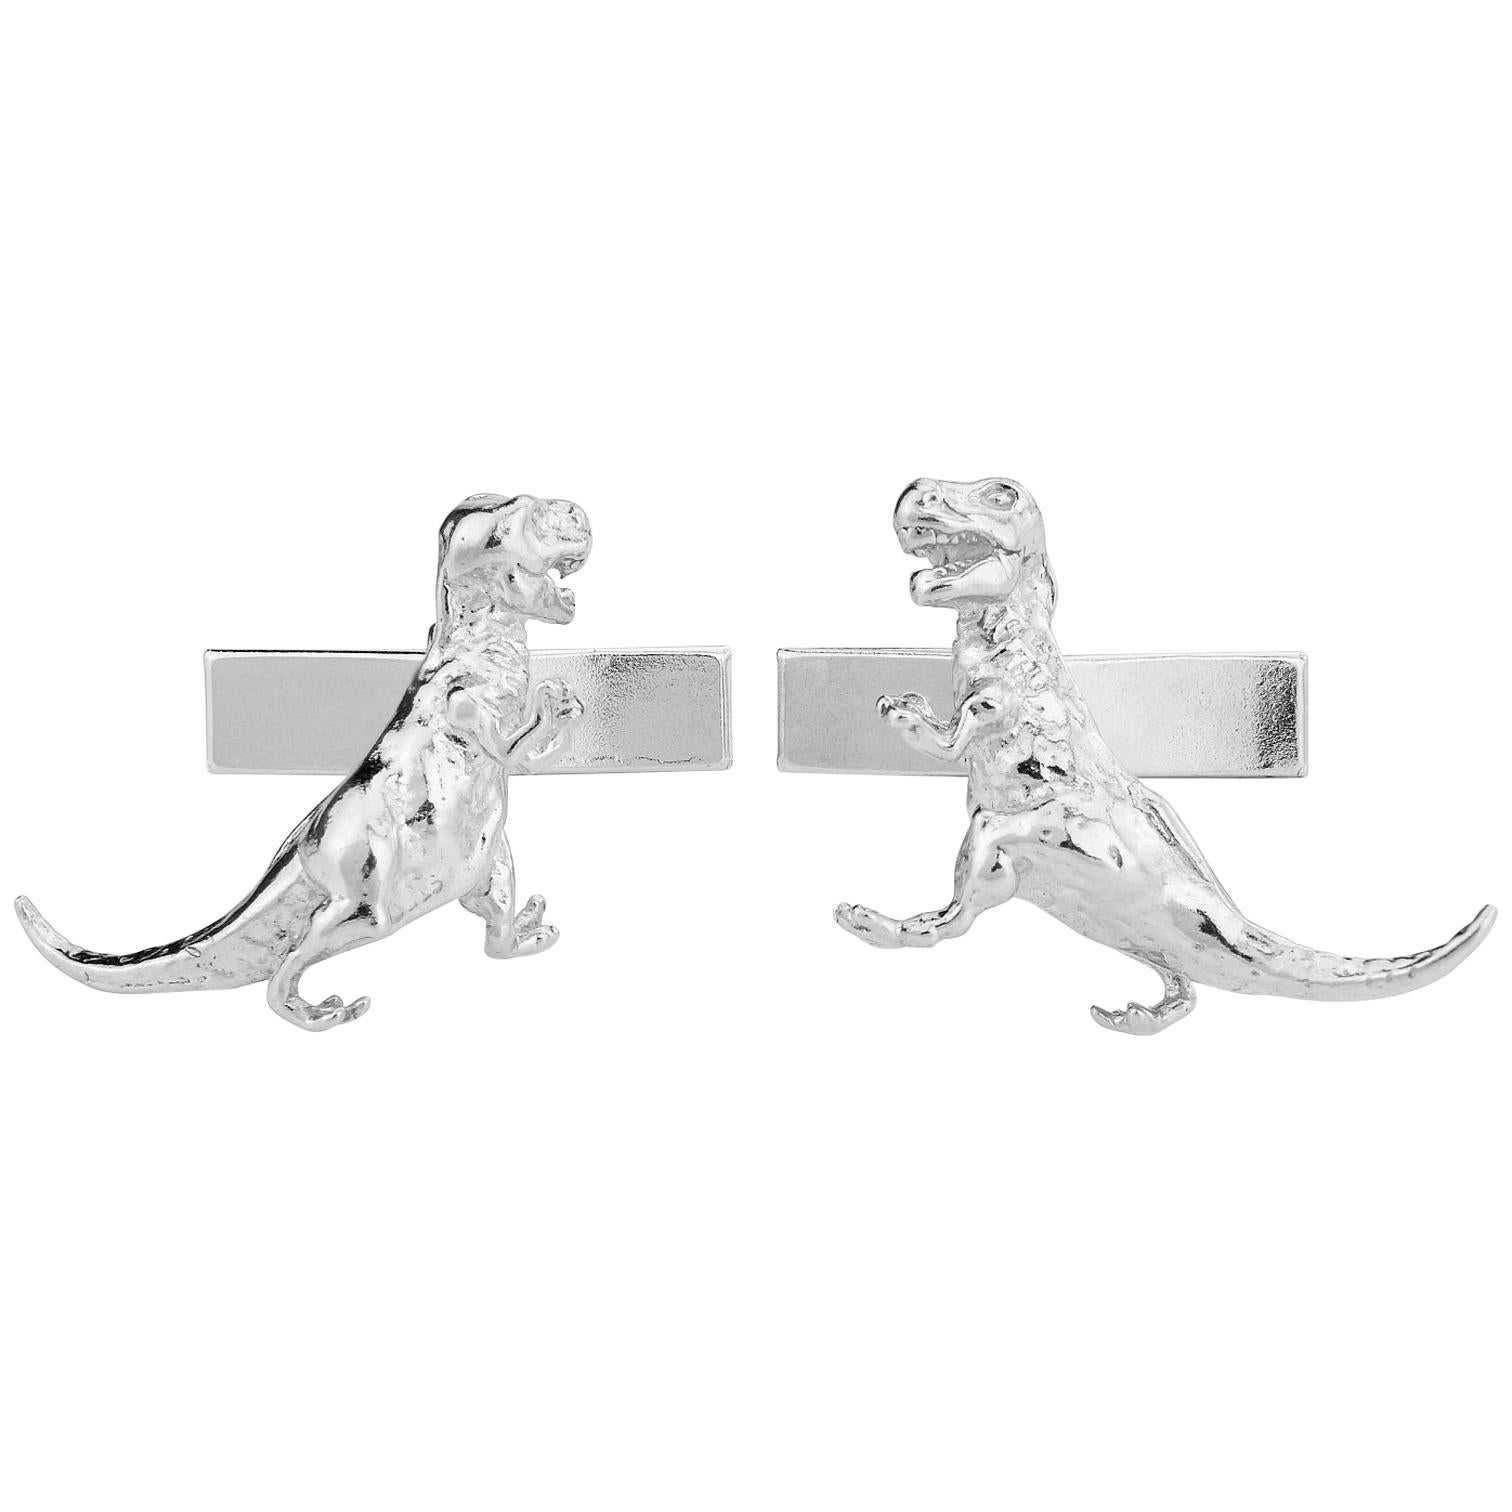 T Rex Dinosaur Cufflinks in Sterling Silver For Sale